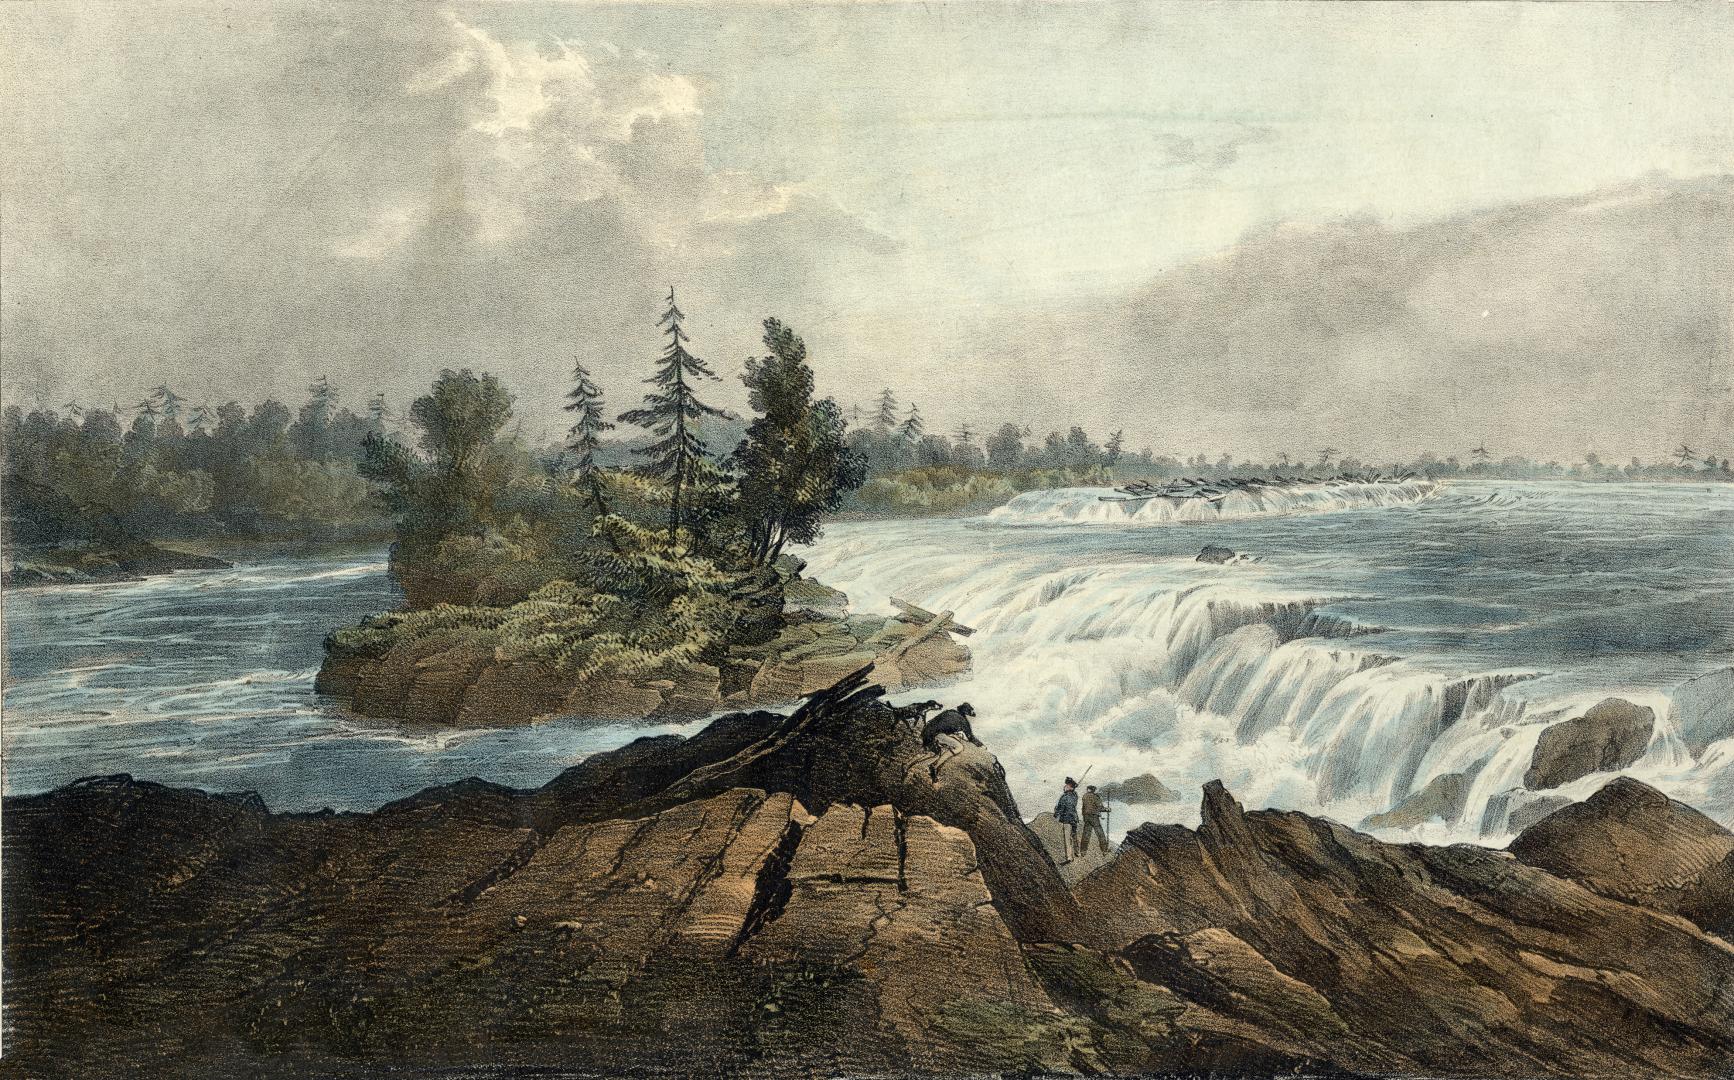 Chaudière Falls, Ottawa River, Upper Canada (Ottawa, Ontario), c